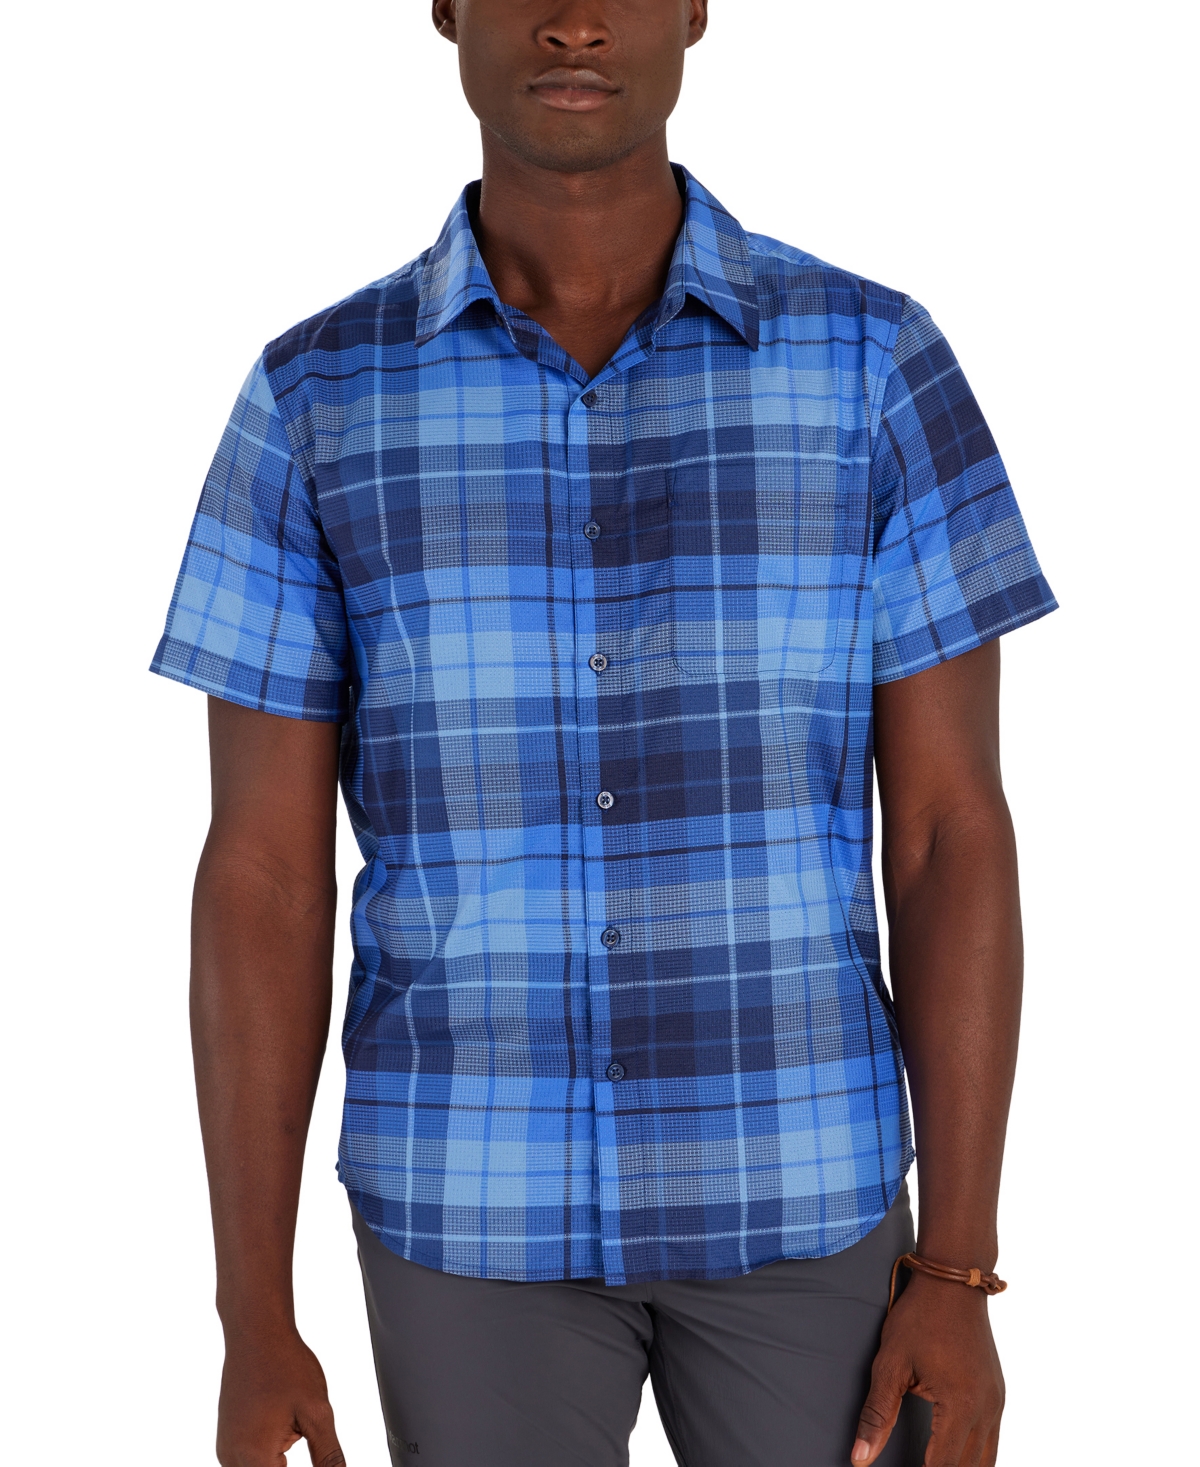 Men's Aerobora Patterned Button-Up Short-Sleeve Shirt - Vetiver Wayland Plaid